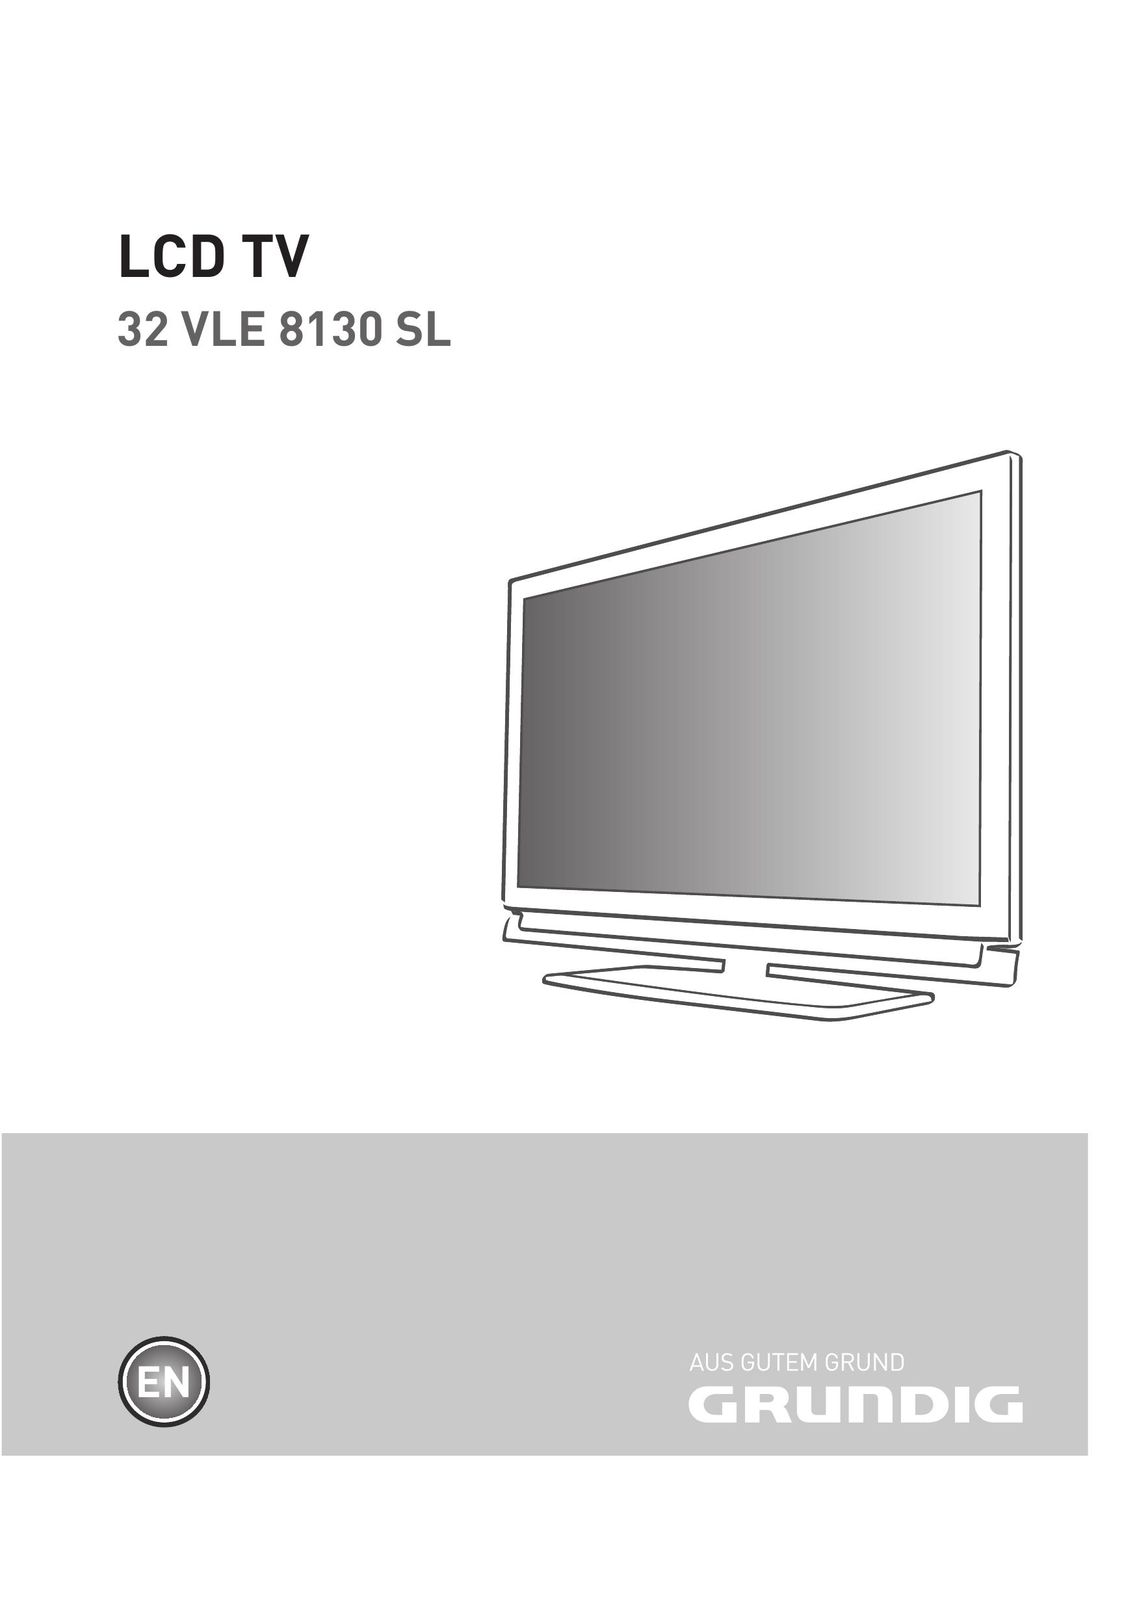 Grundig 32 VLD 8130 SL Flat Panel Television User Manual